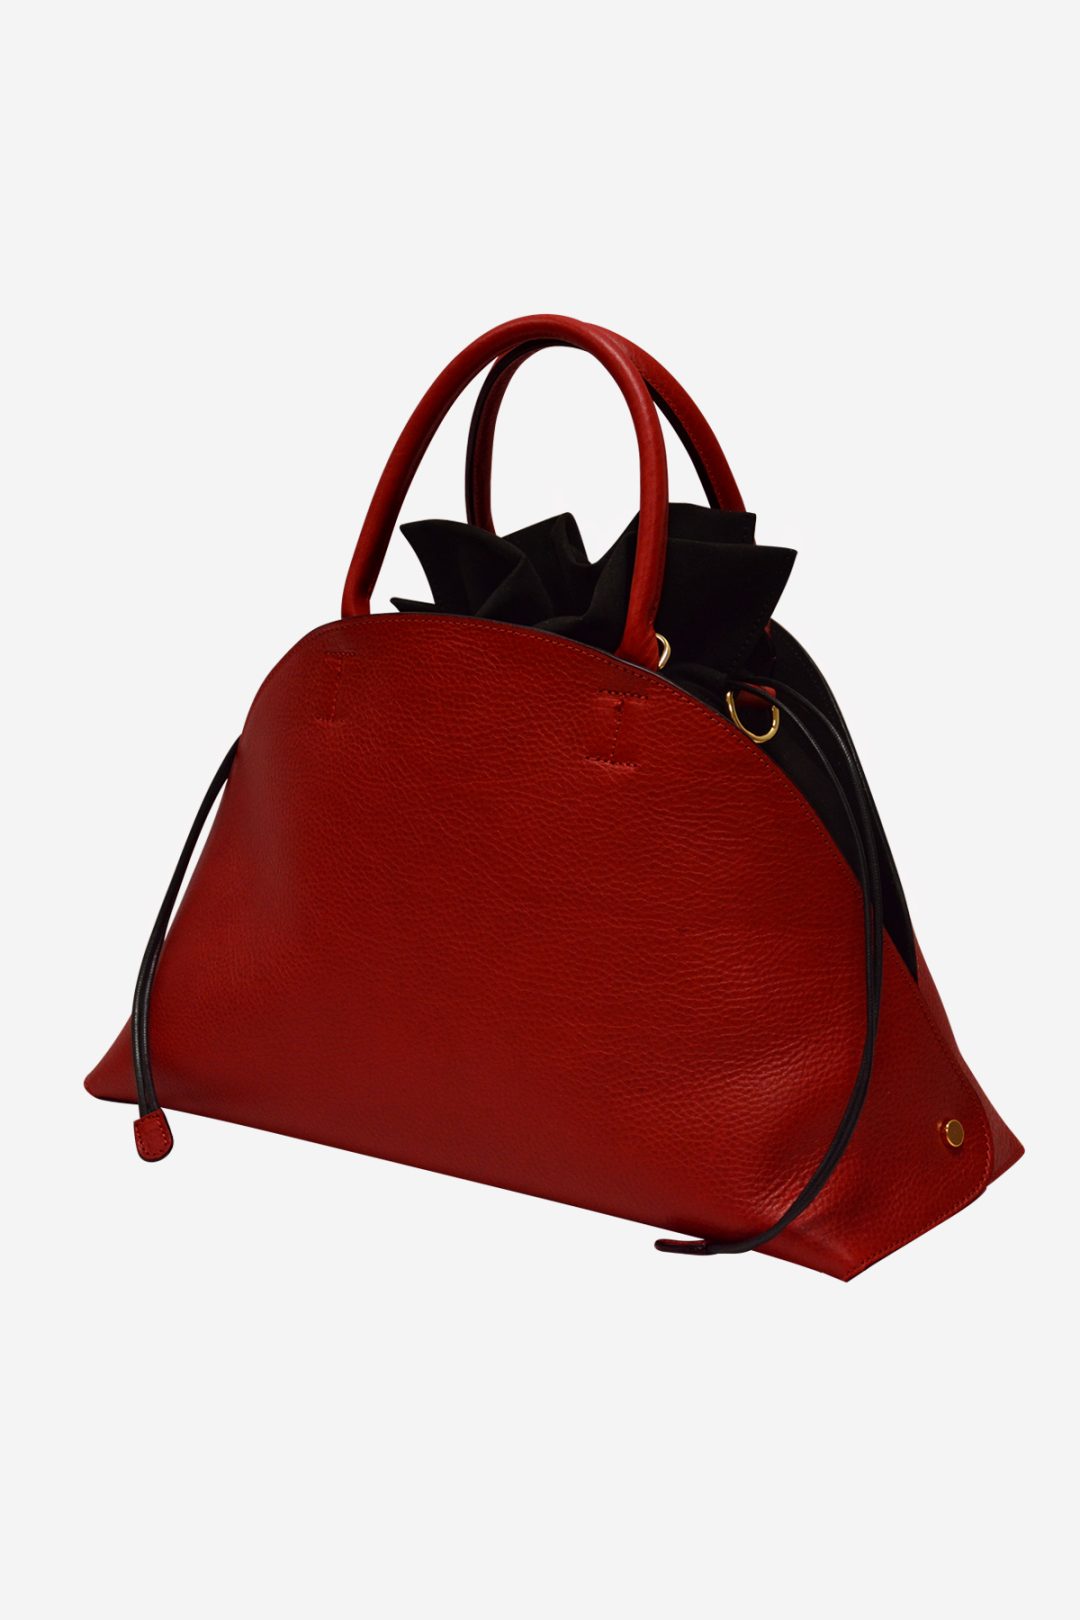 Major Hemispheric Handbag - Made in Italy, vegetable tan leather